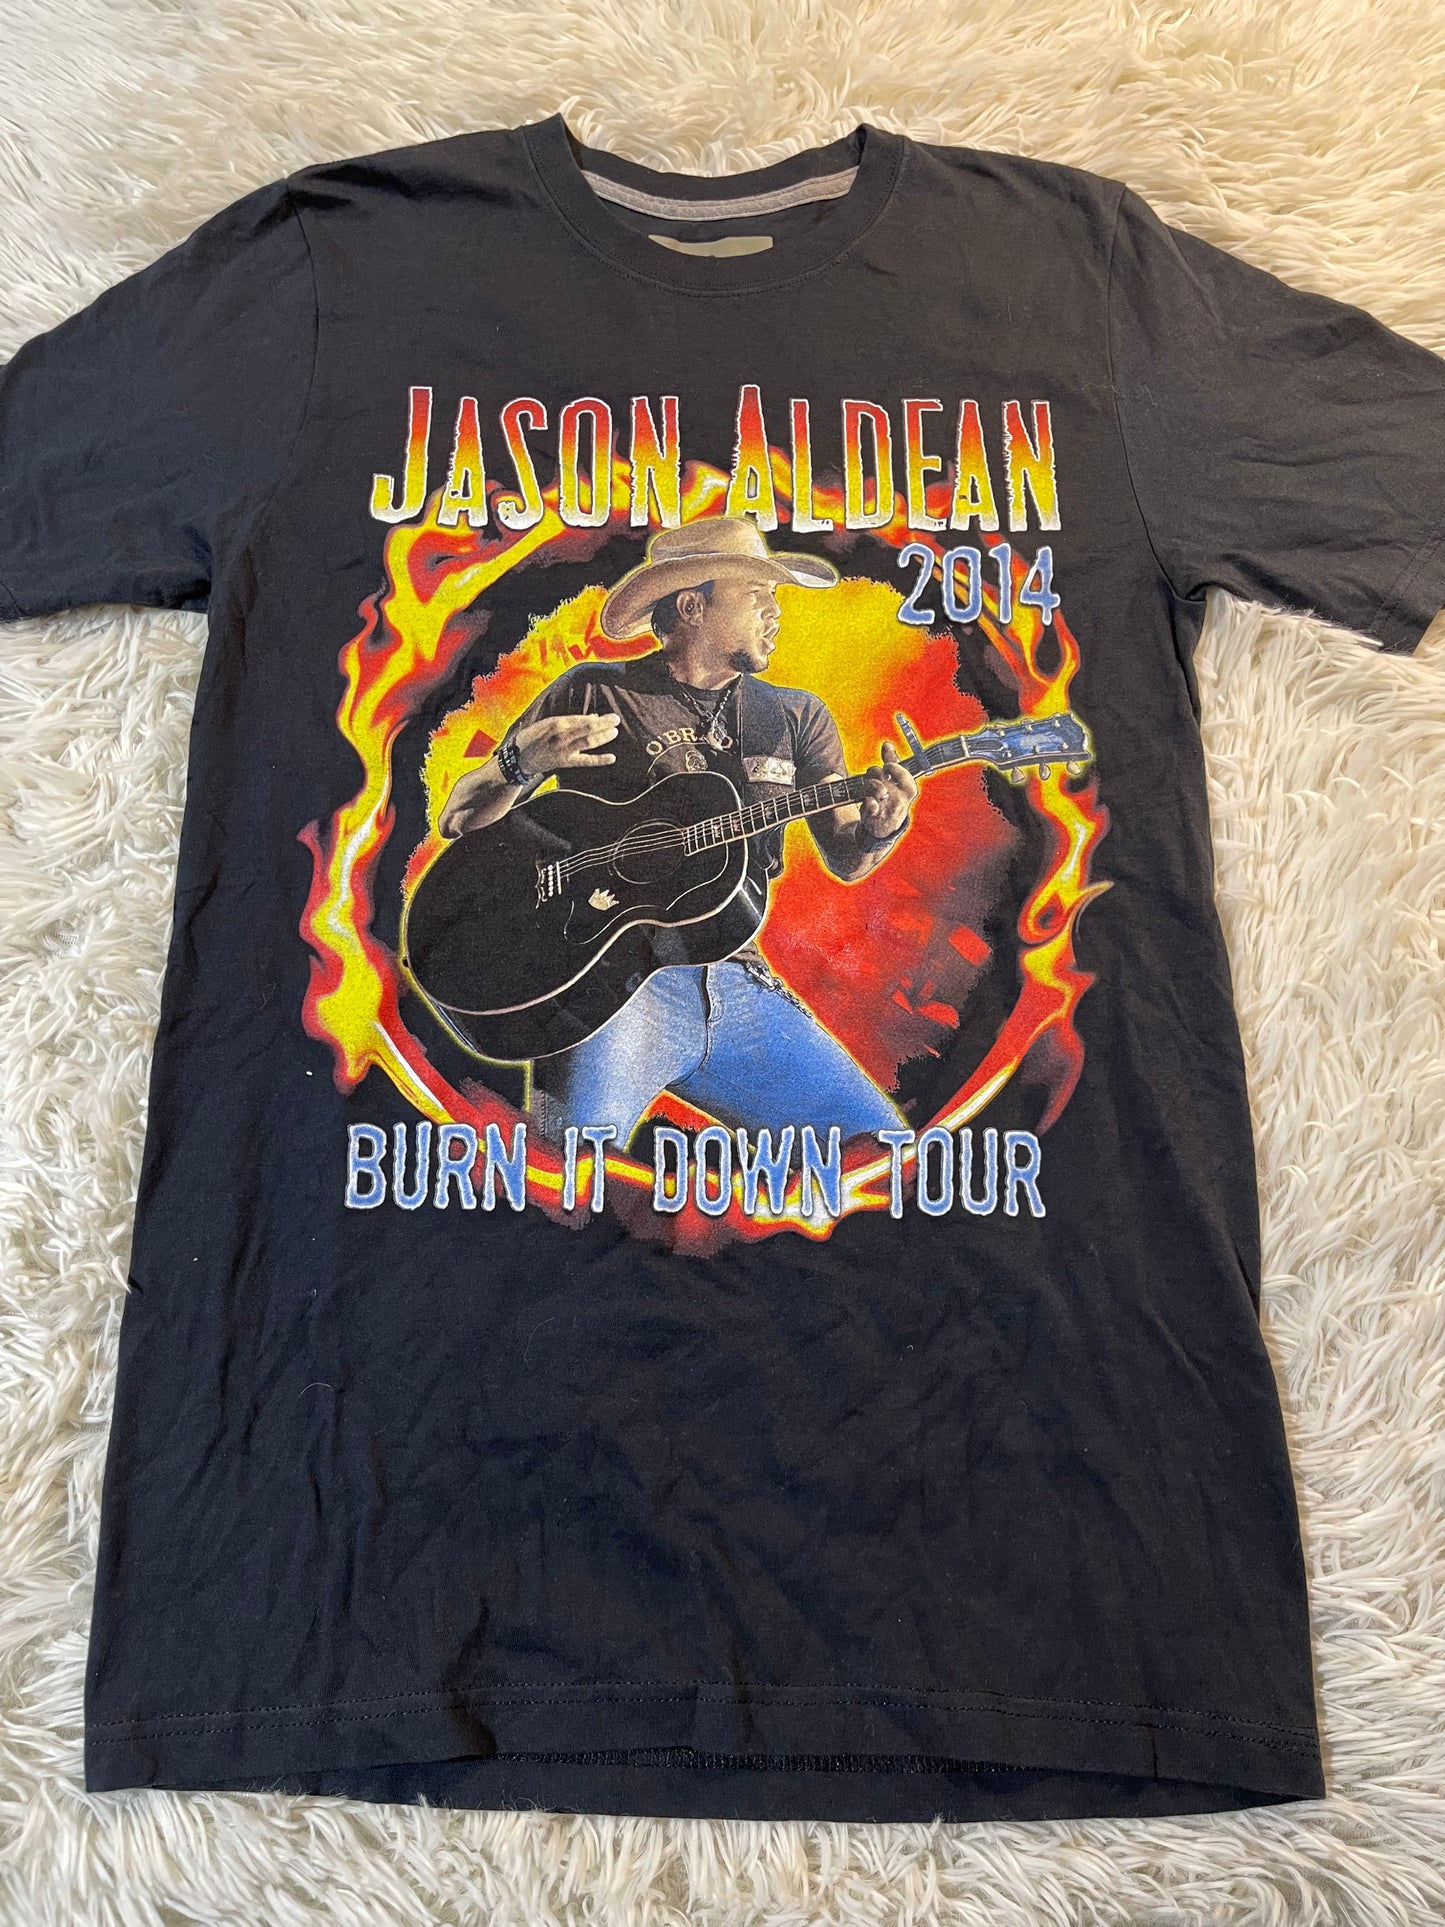 Jason Aldean 2014 "Burn It Down Tour" T-Shirt Black - Small